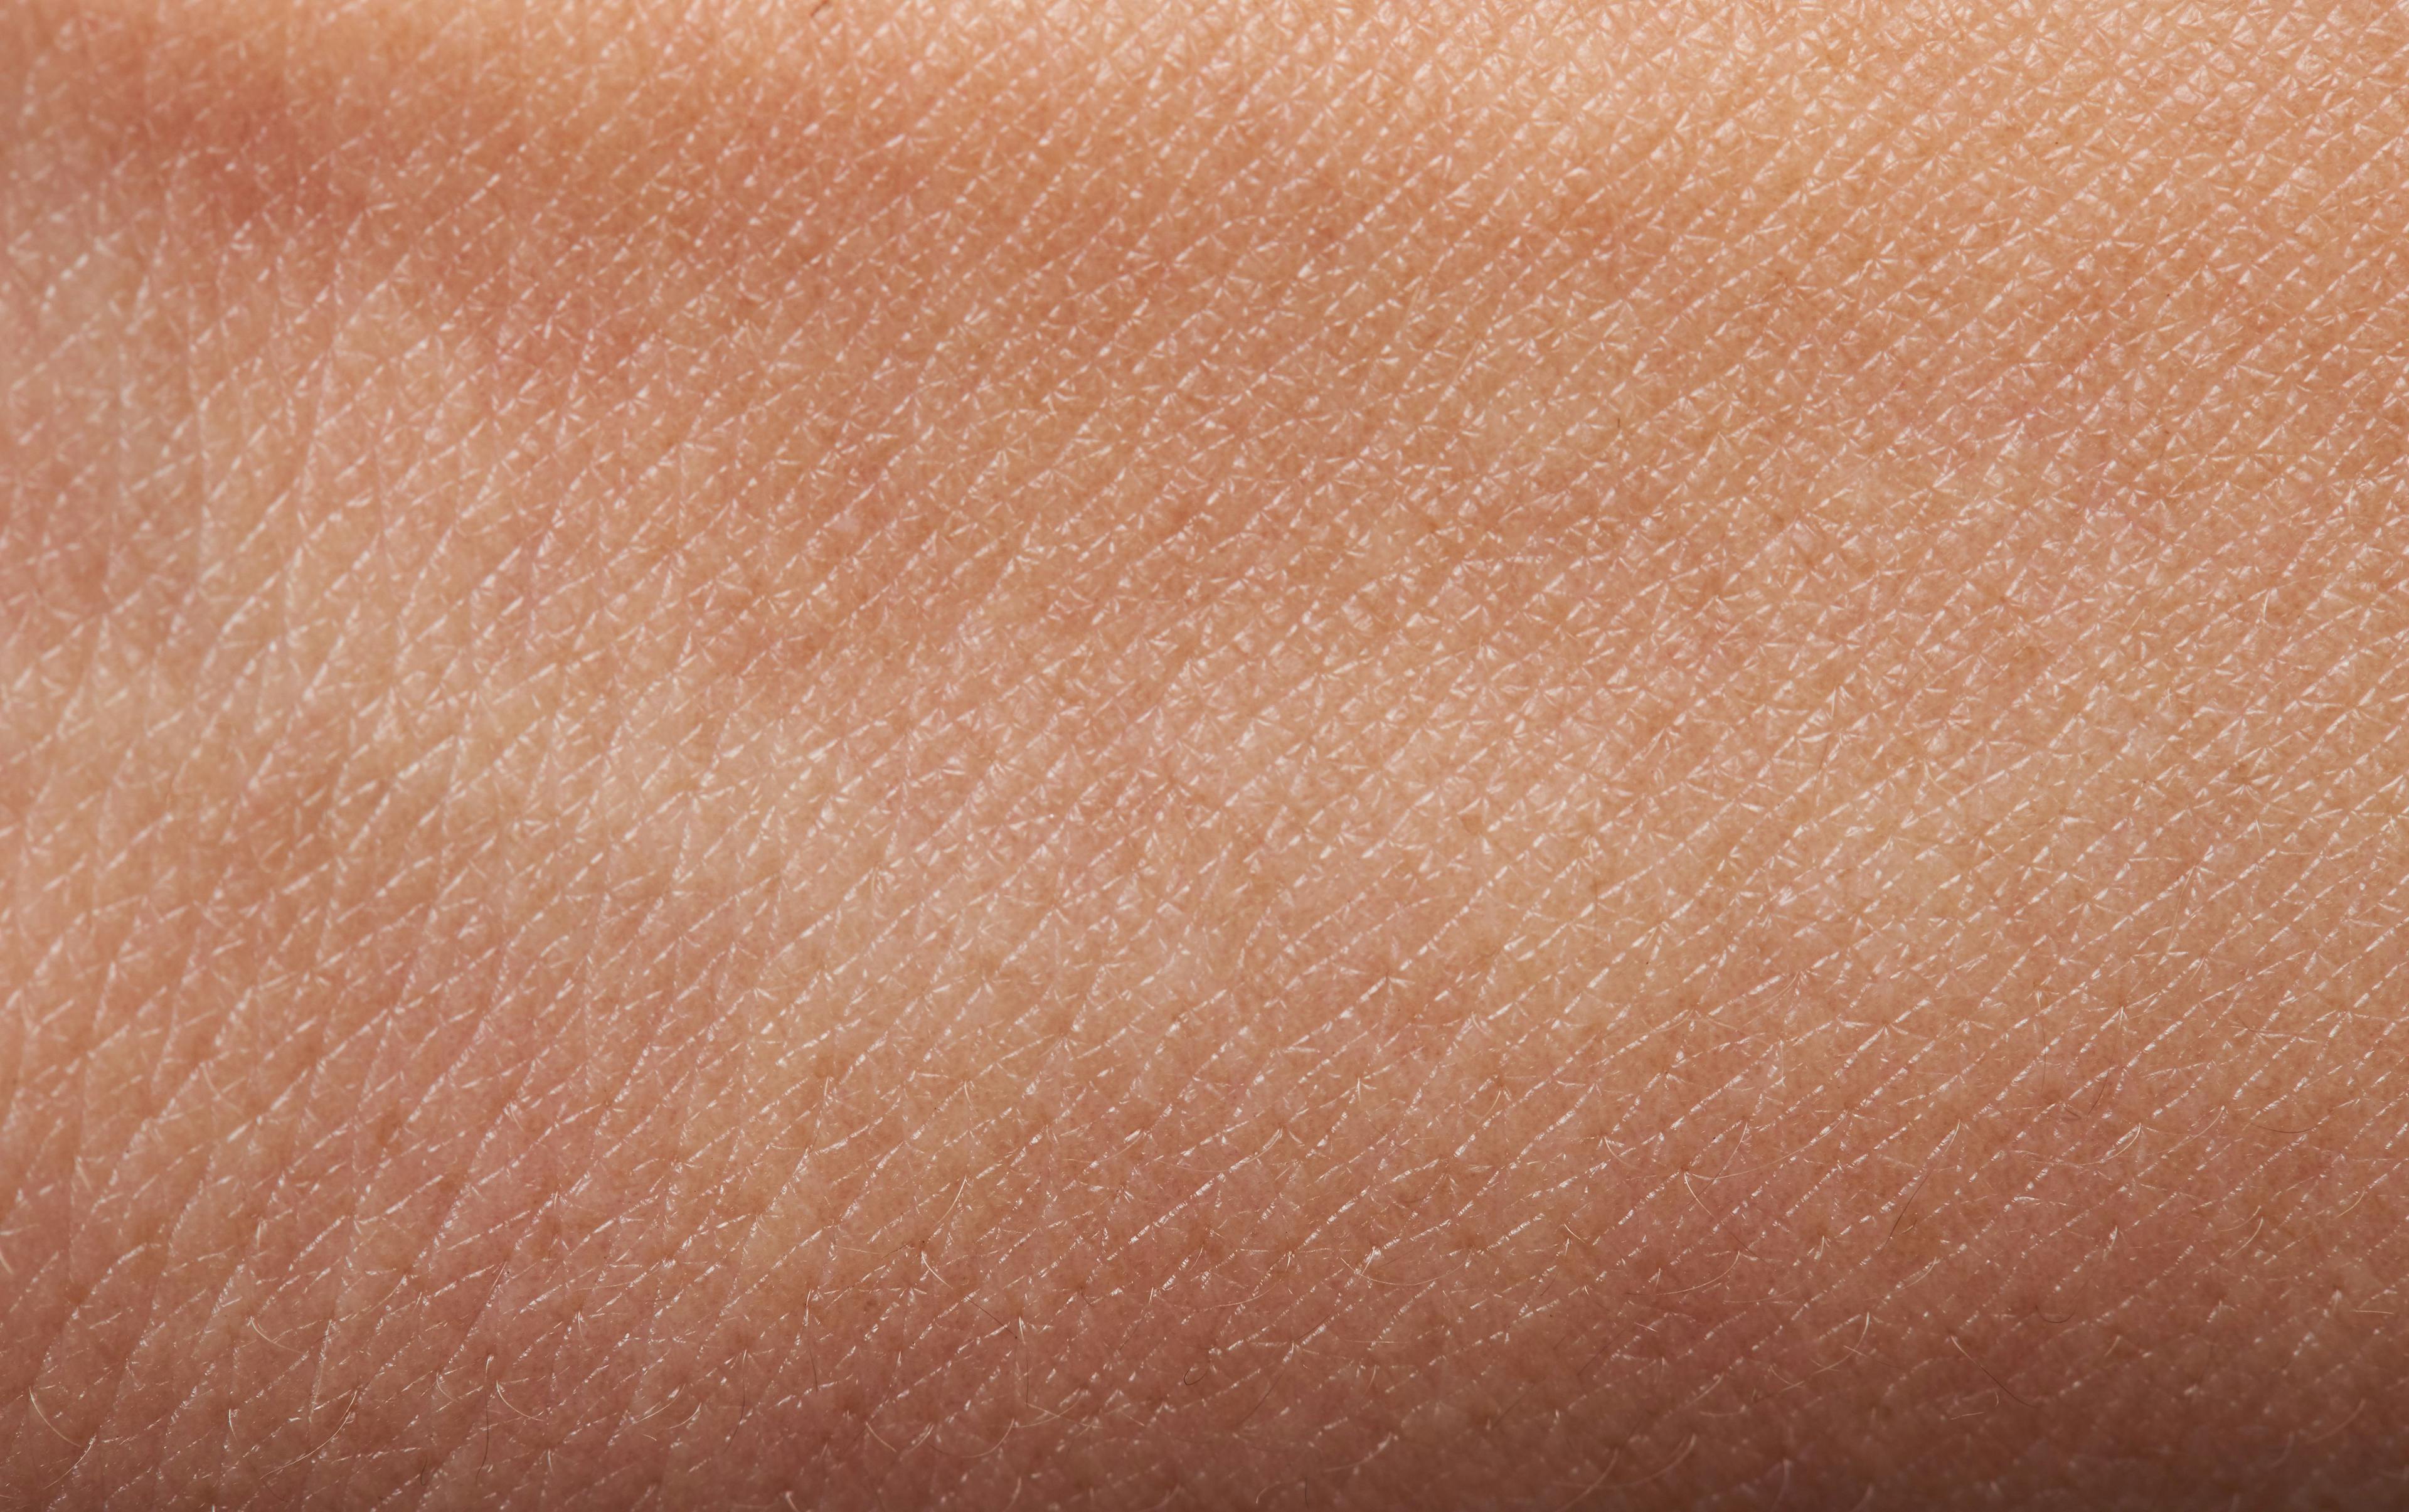 Flat human skin | Image Credit: © PixieMe - stock.adobe.com